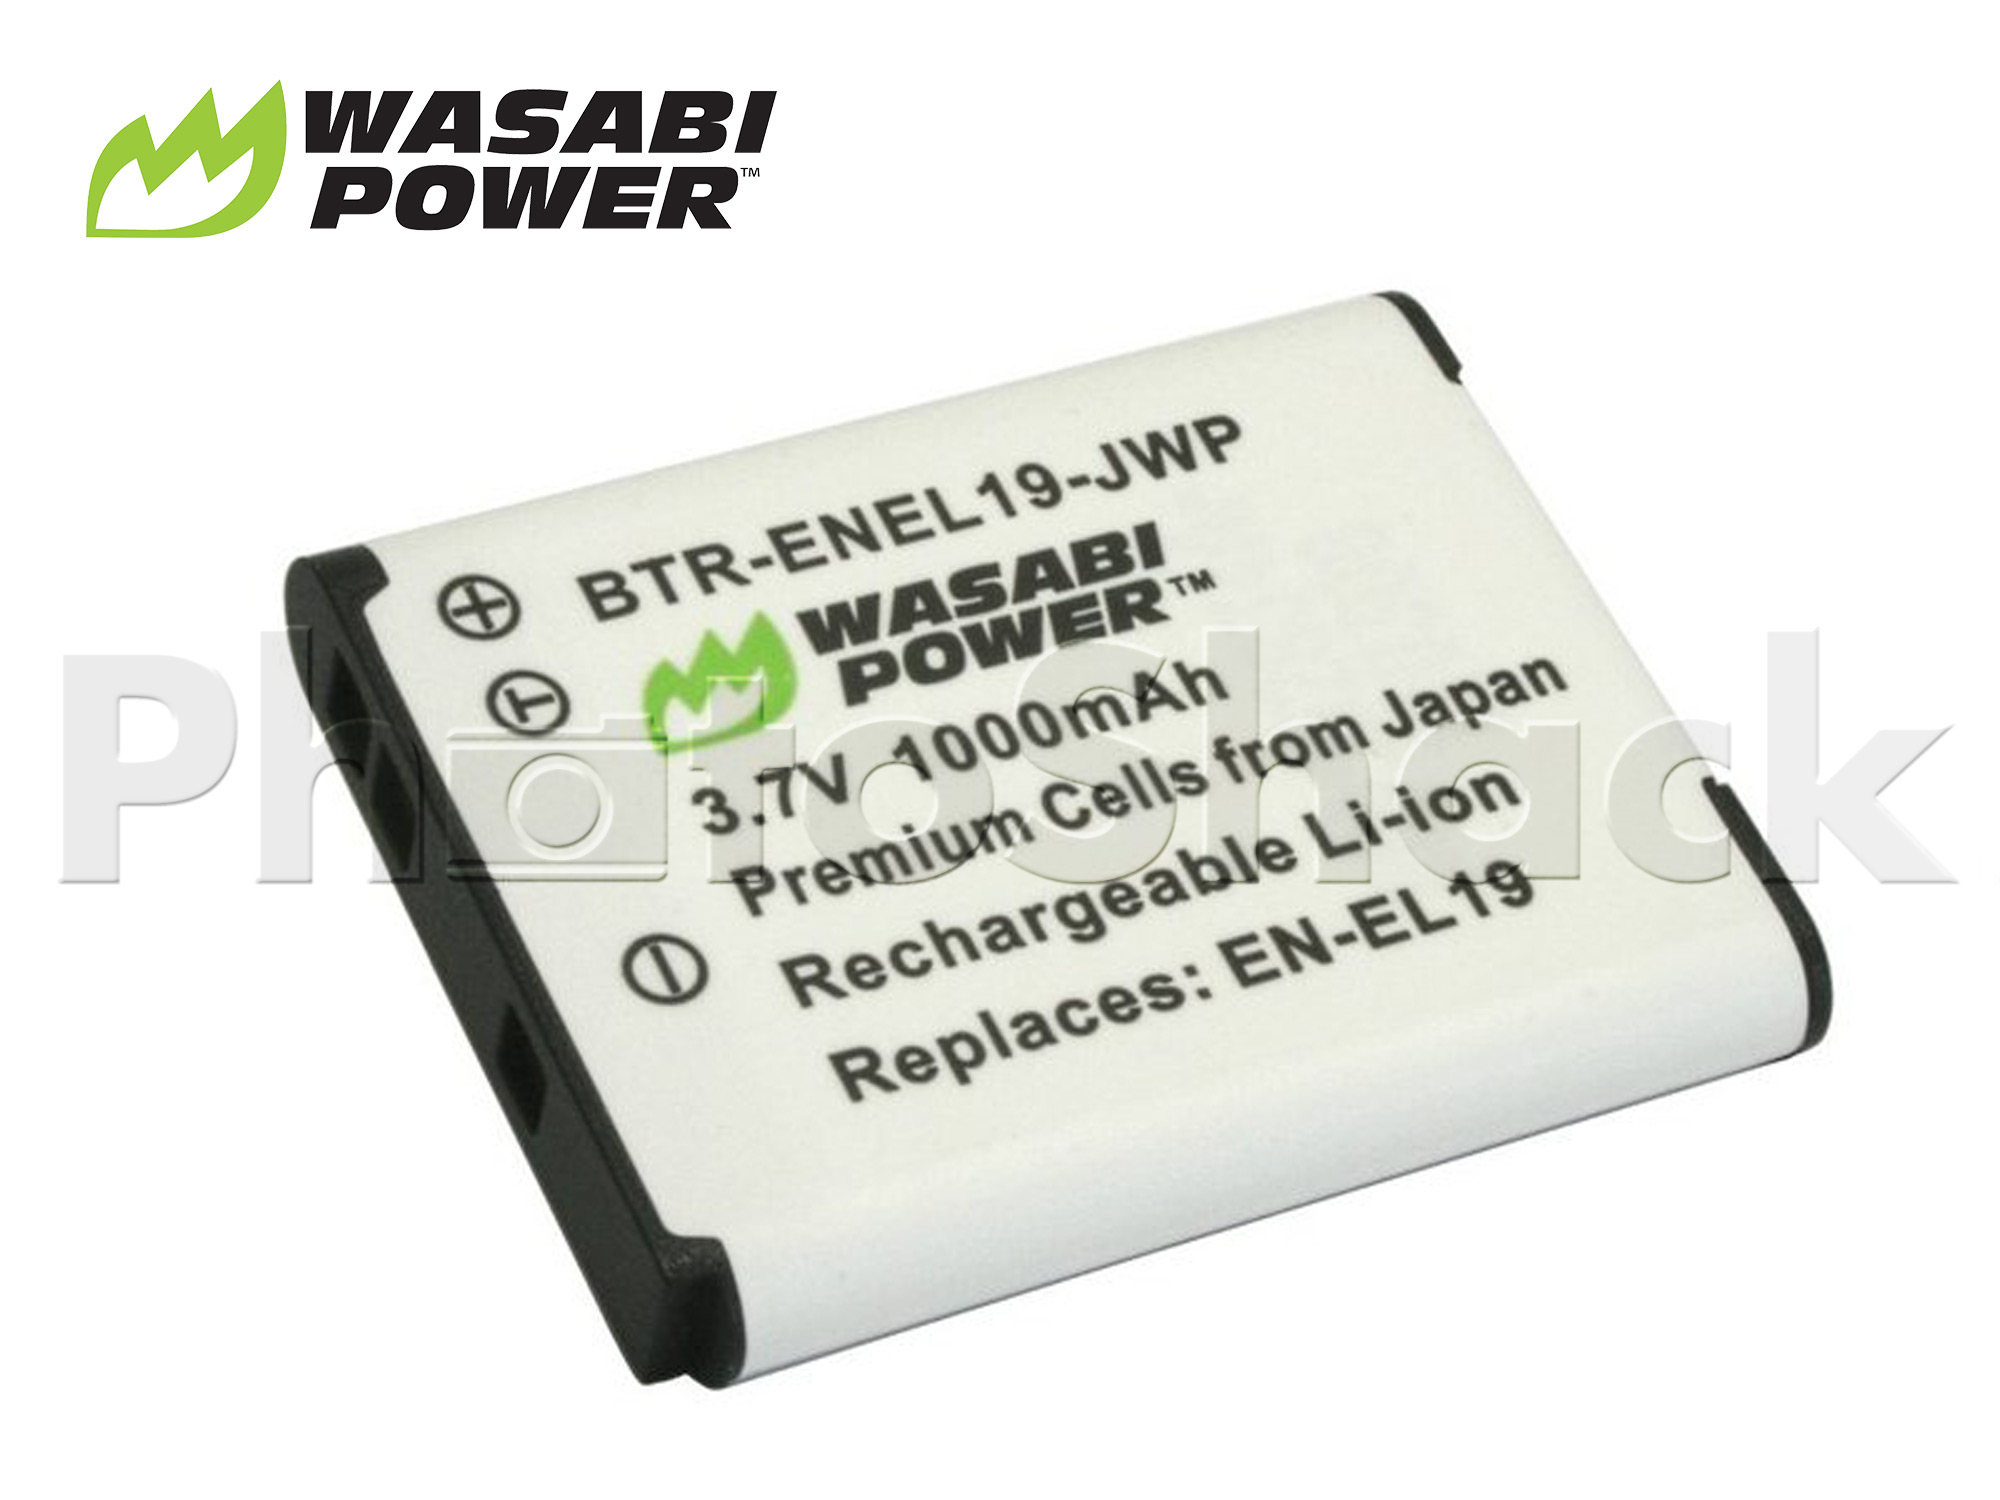 ENEL19 Battery for Nikon - Wasabi Power